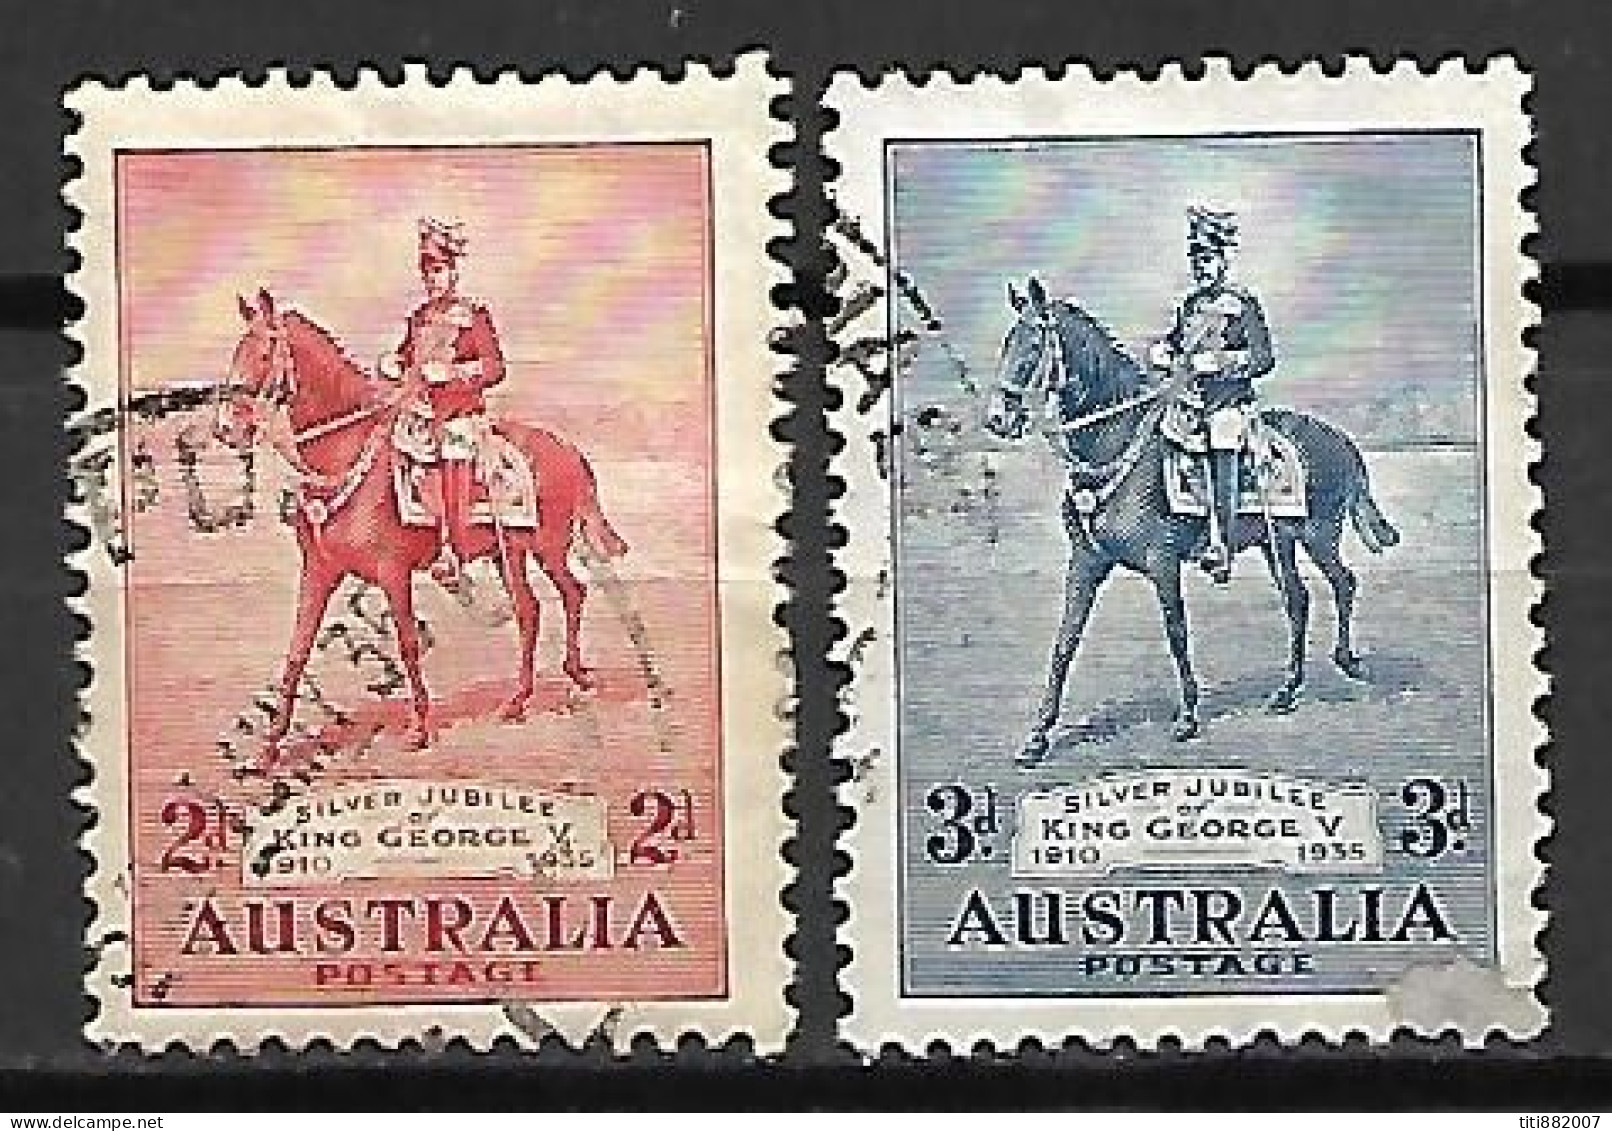 AUSTRALIE   -  1935 .  Y&T N° 102 / 103 Oblitérés - Used Stamps